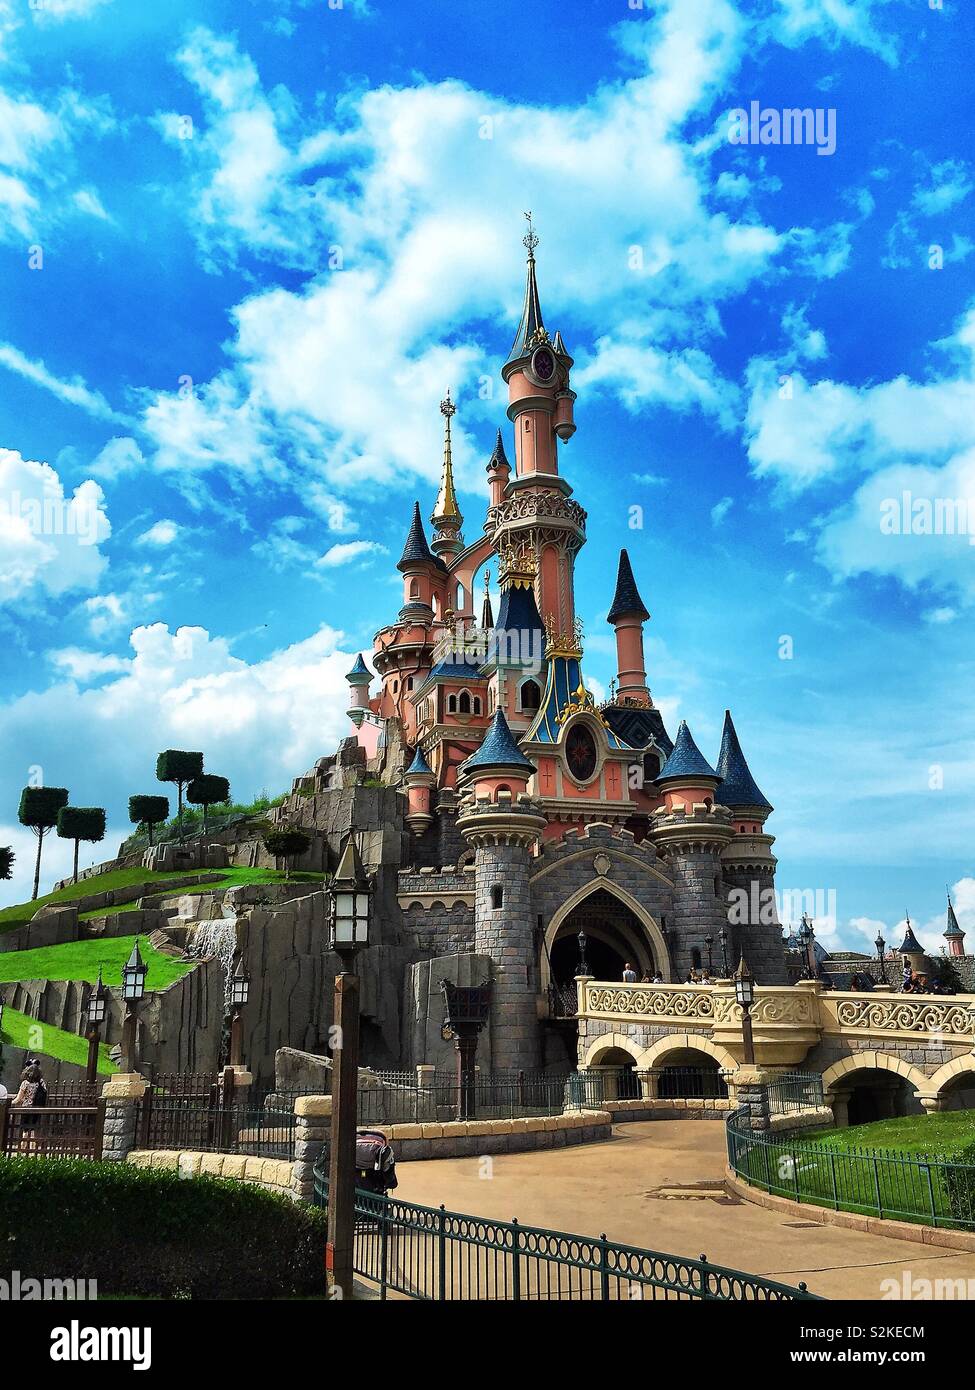 Disneyland Paris Sleeping Beauty Castle Disney Castle Stock Photo Alamy